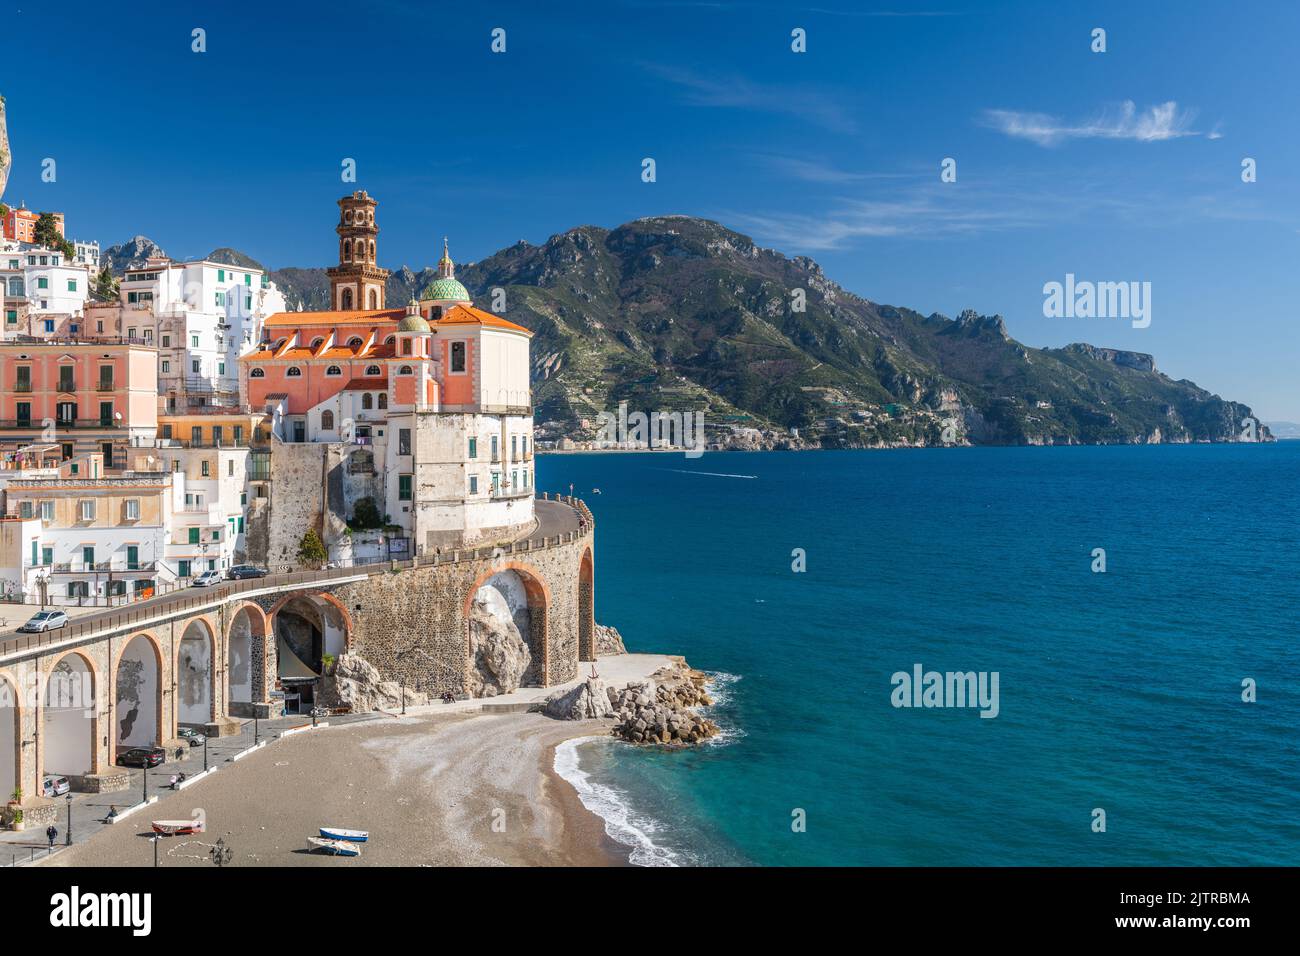 Atrani, Italy along the beautiful Amalfi Coast in the afternoon. Stock Photo